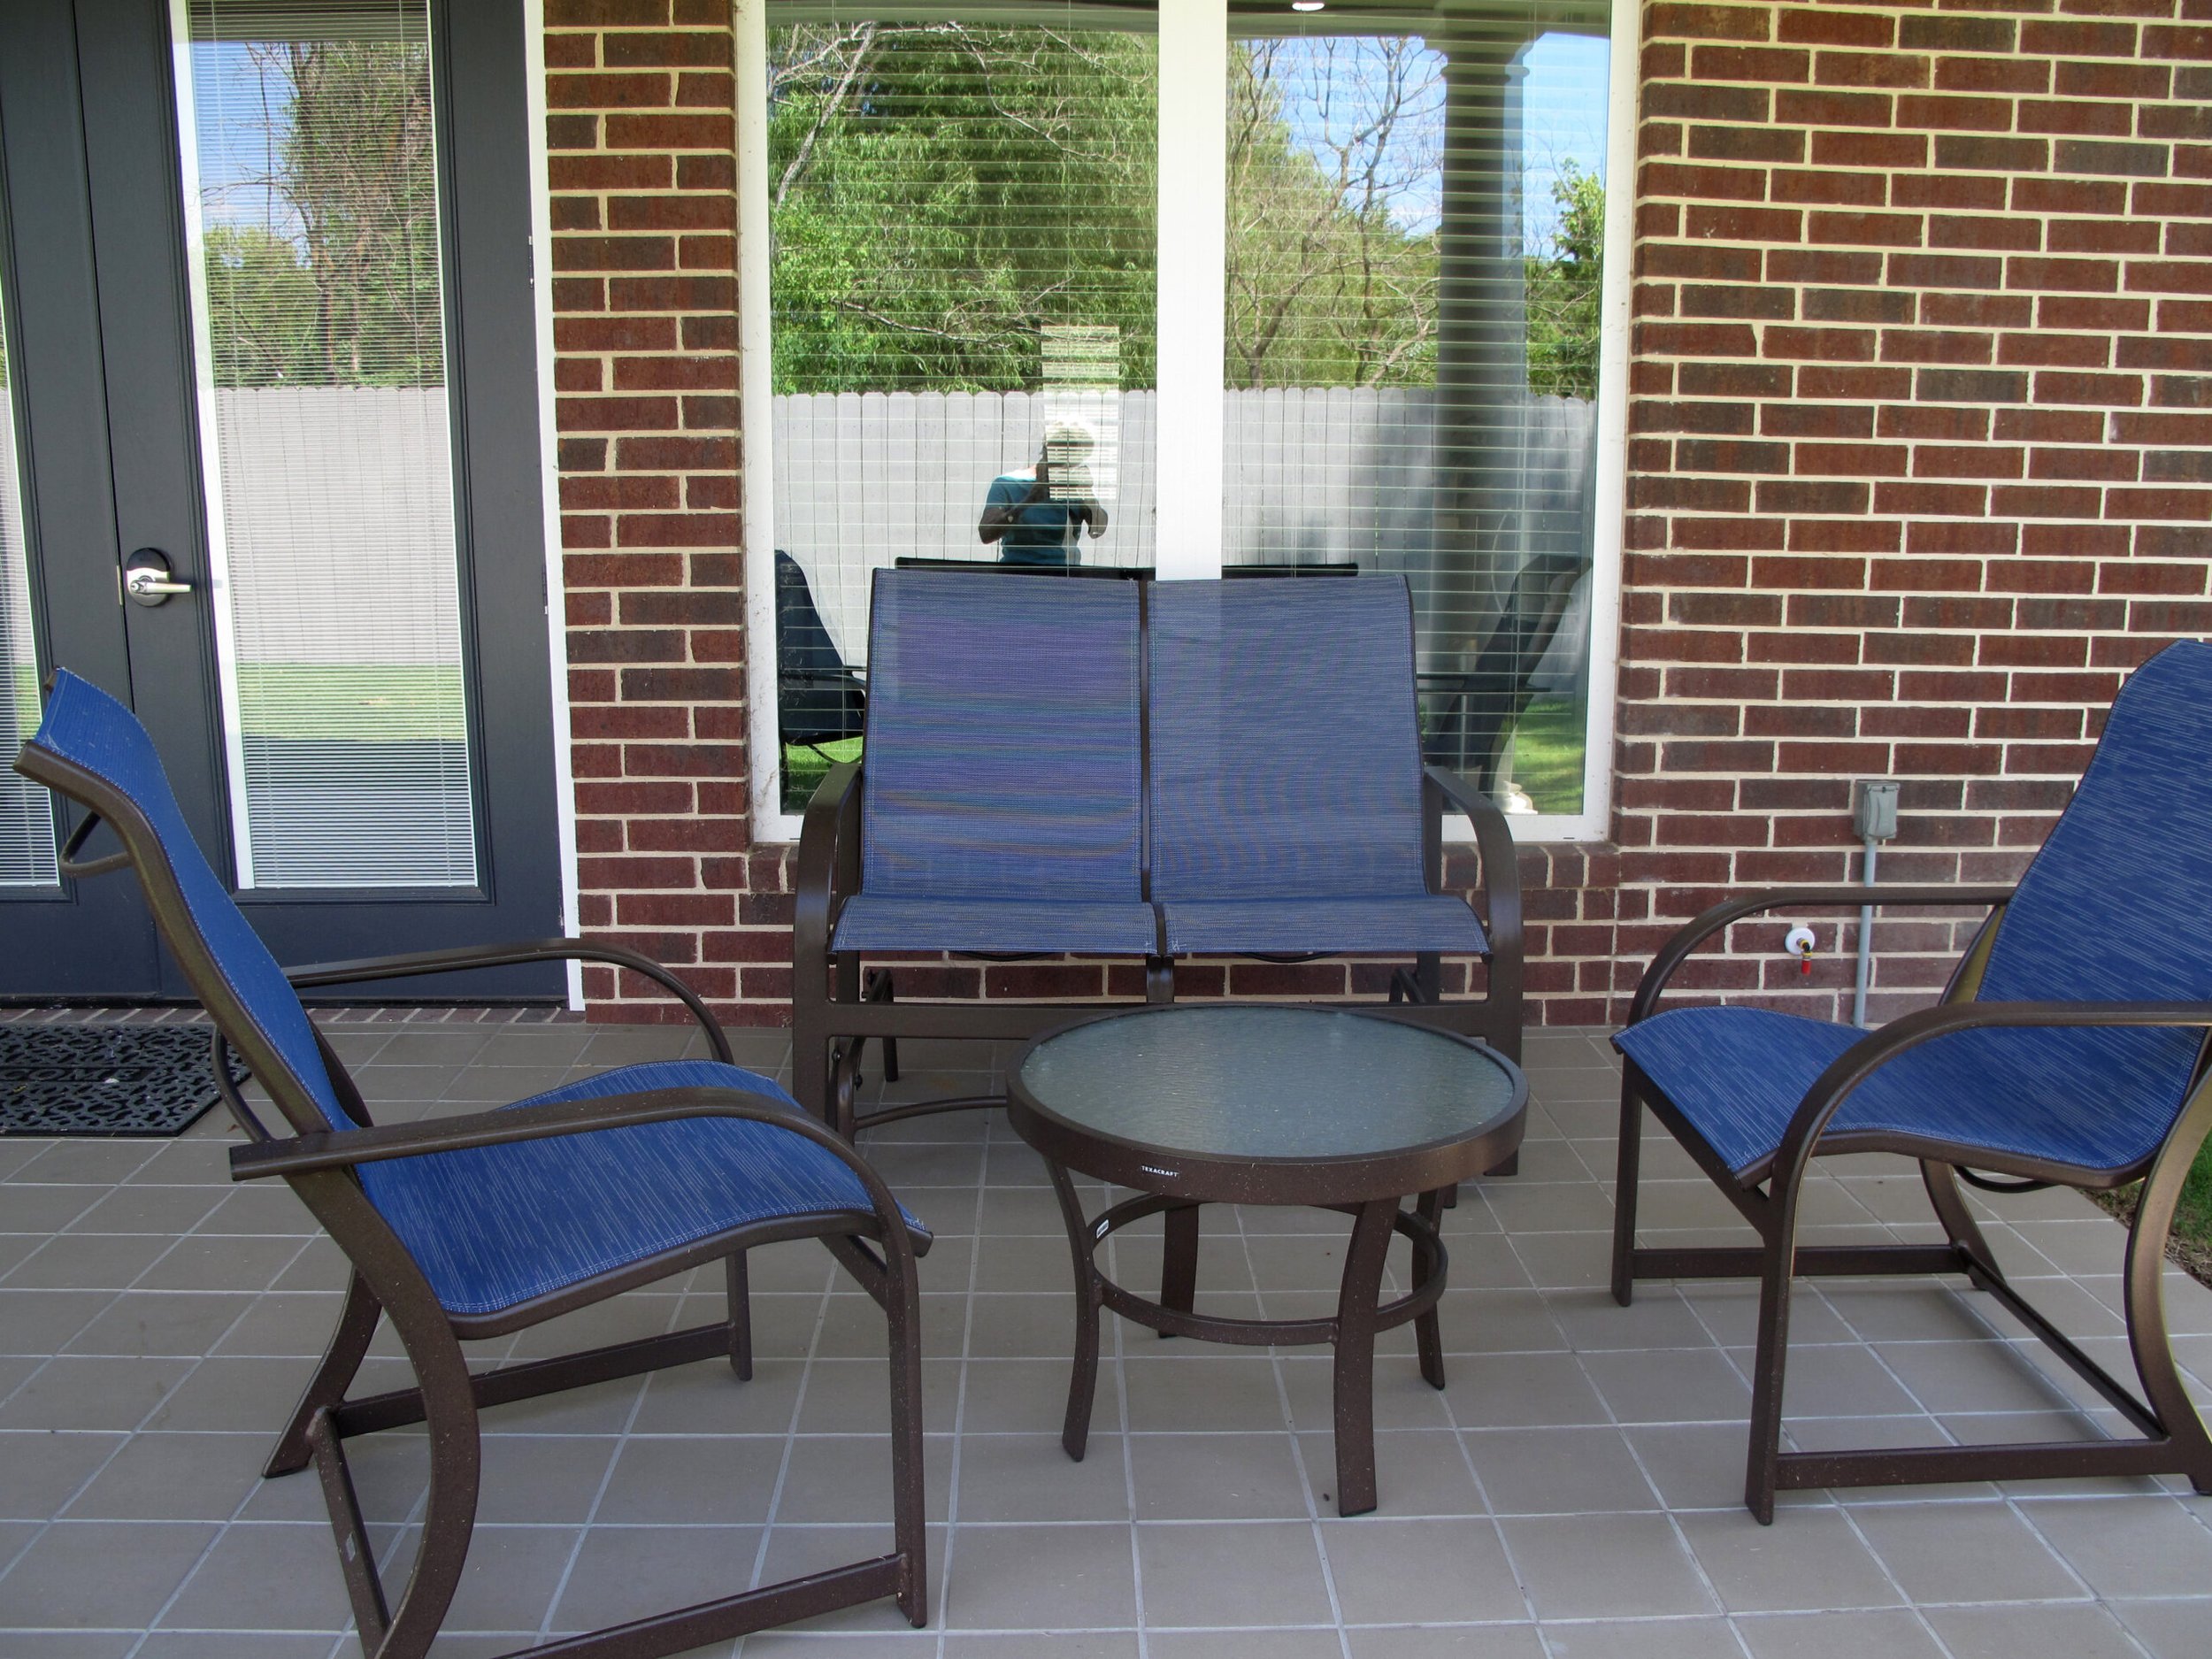 08-12-2021-patio-furniture1-scaled.jpg